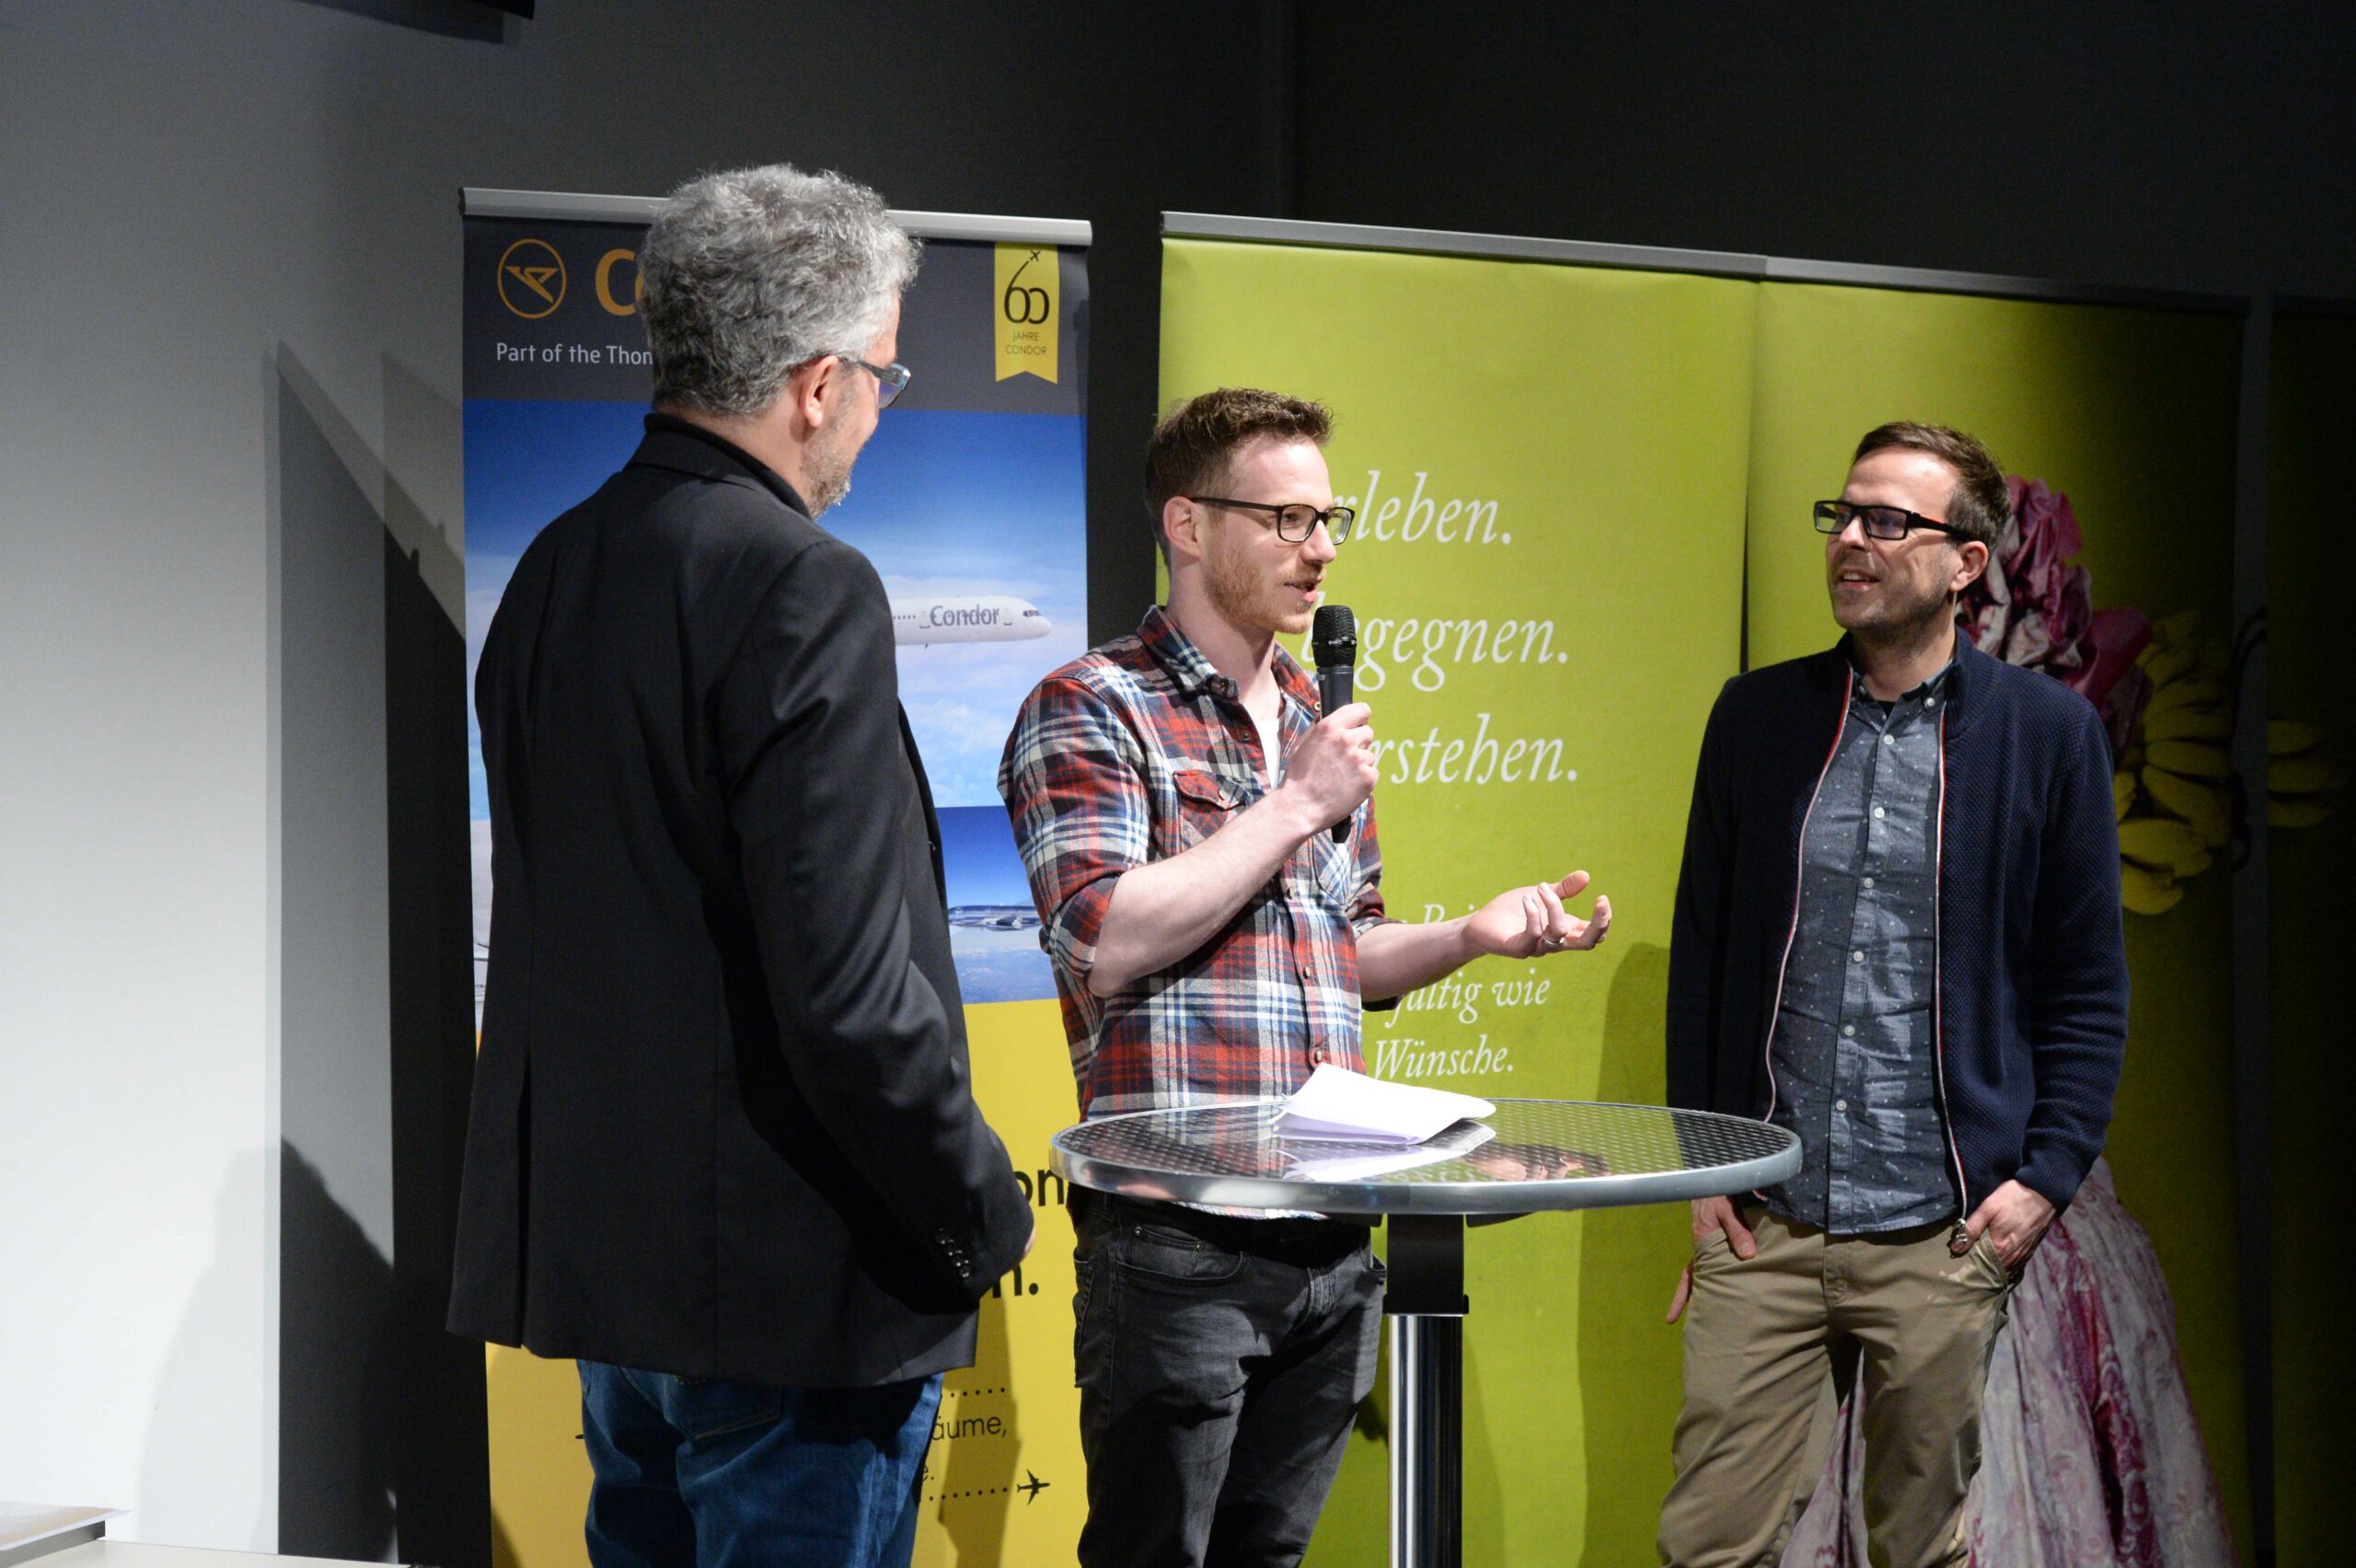 Columbus Film Preisverleihung 2015 Christoph Karrasch und Thomas Niemann Talk mit Thomas Radler web